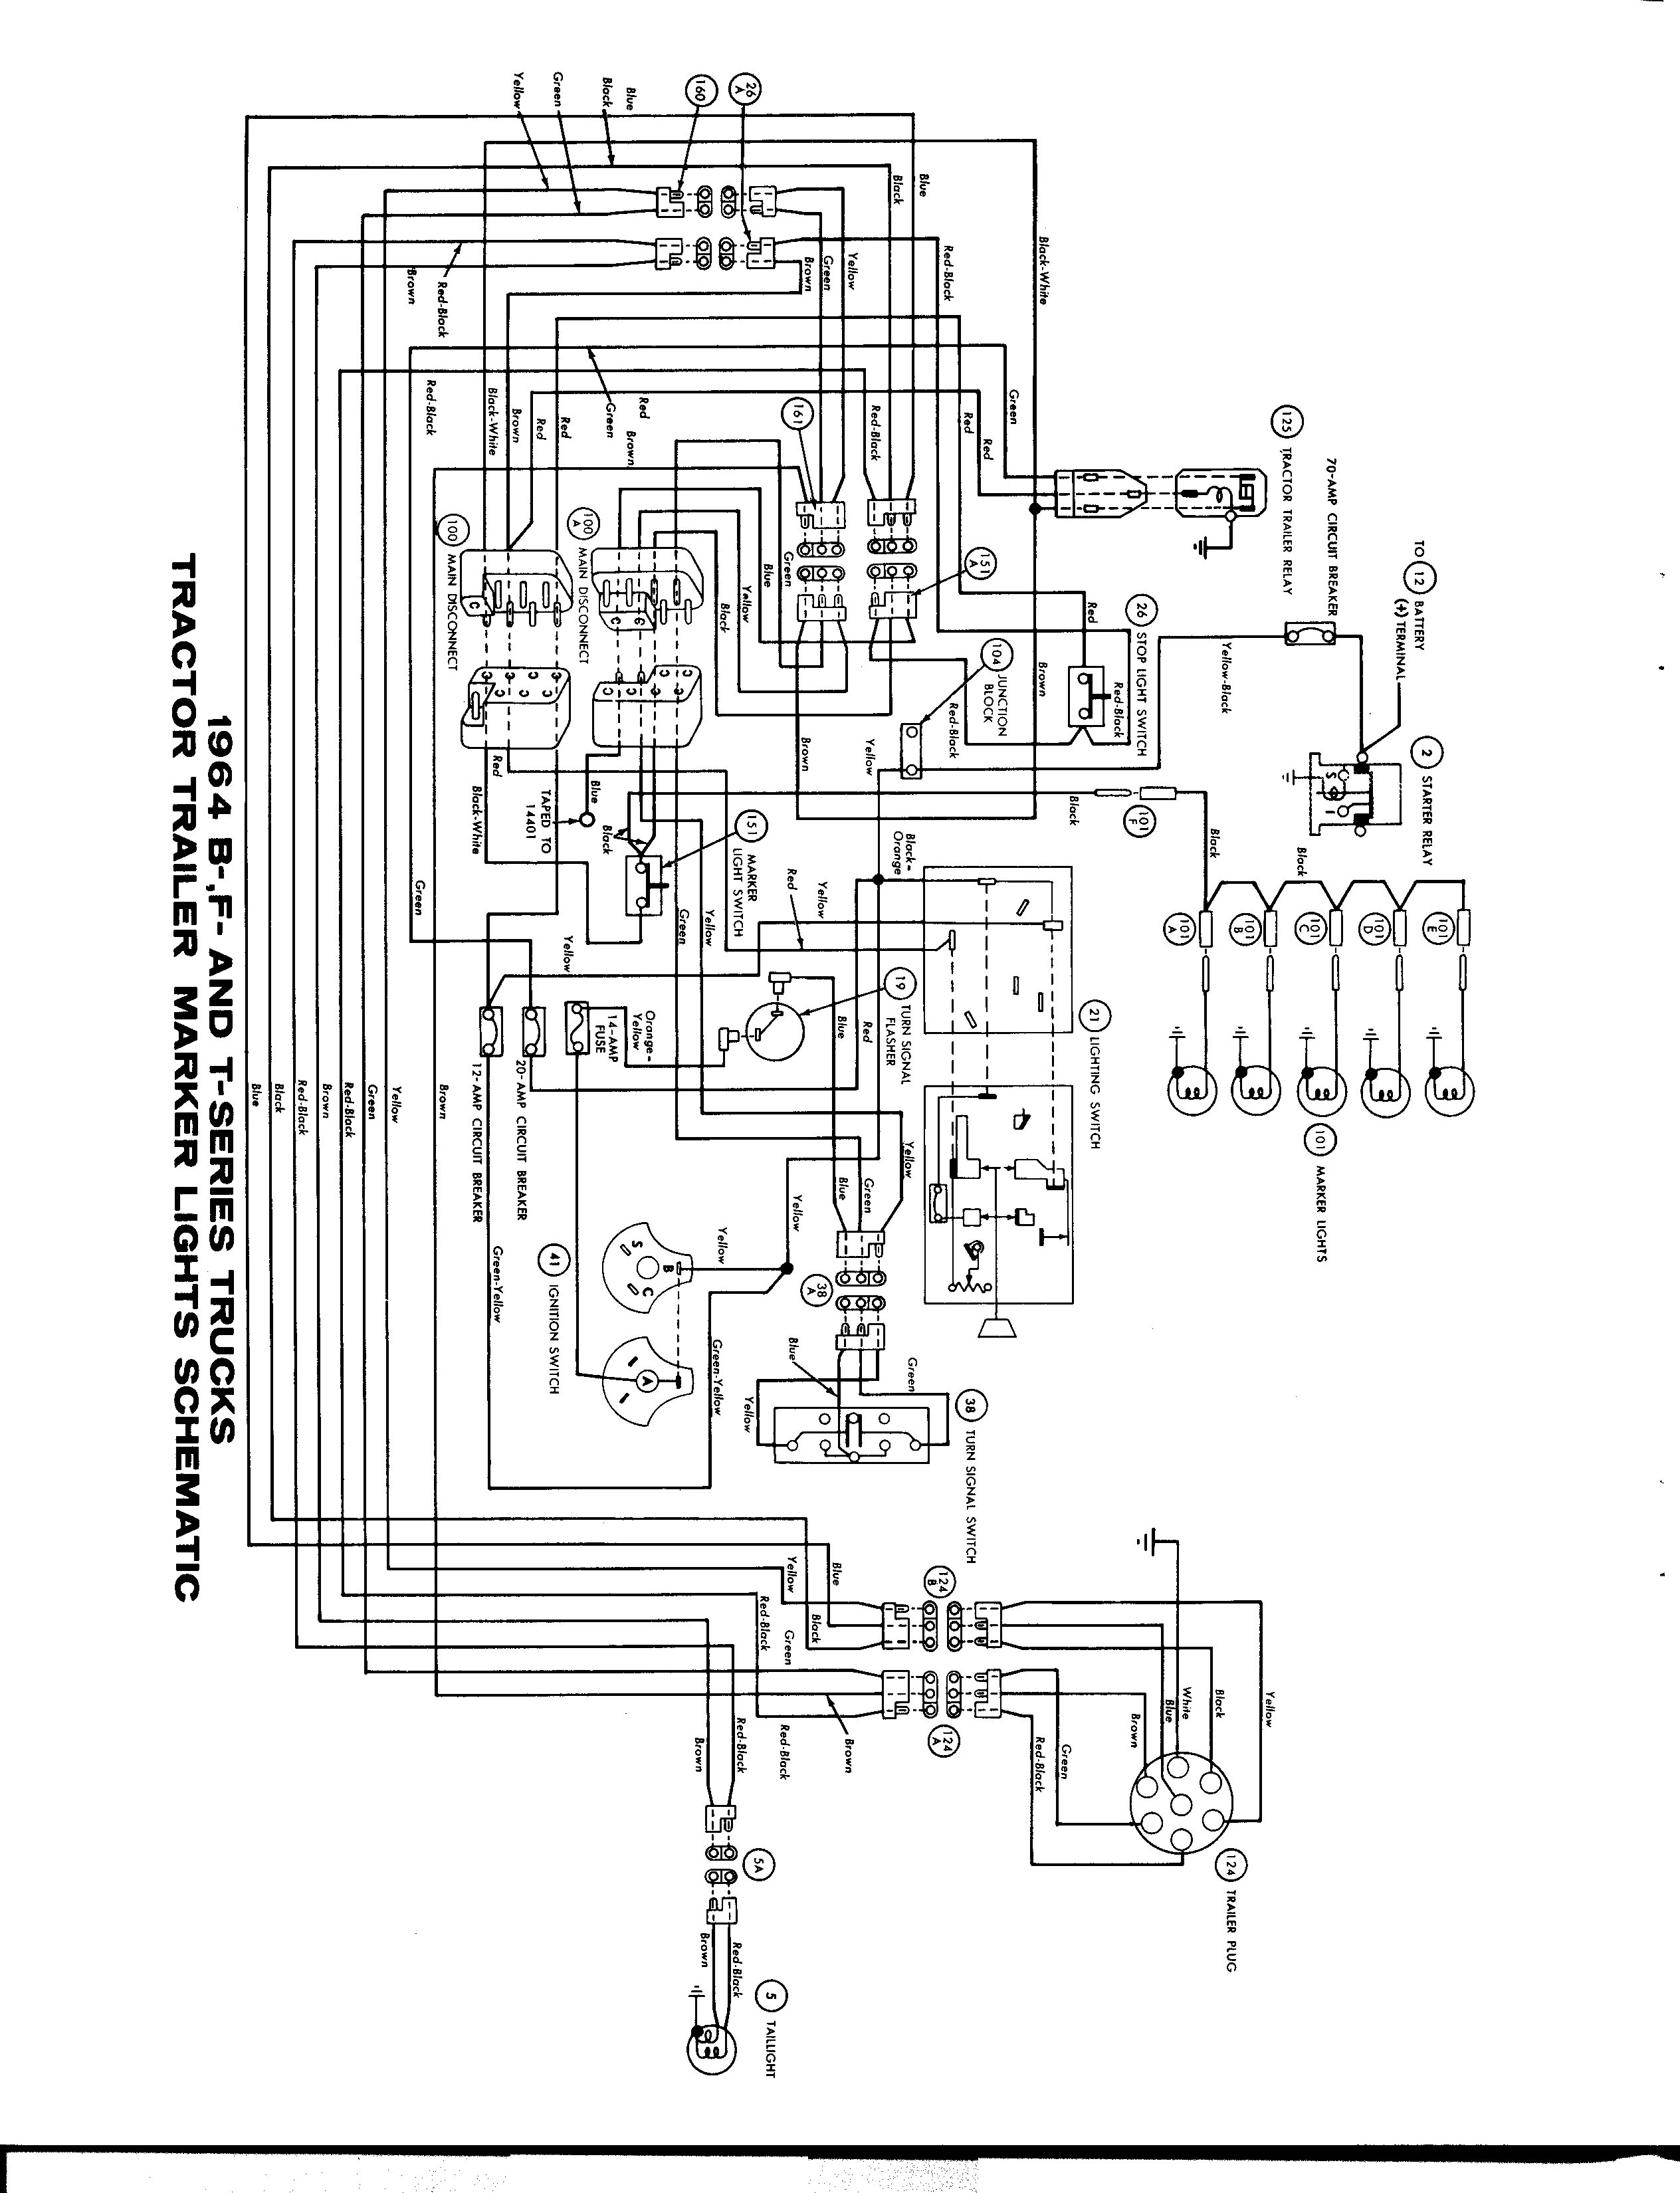 Diagram 1600 Series Tractor Power King Wiring Diagram Full Version Hd Quality Wiring Diagram Rackdiagram Culturacdspn It